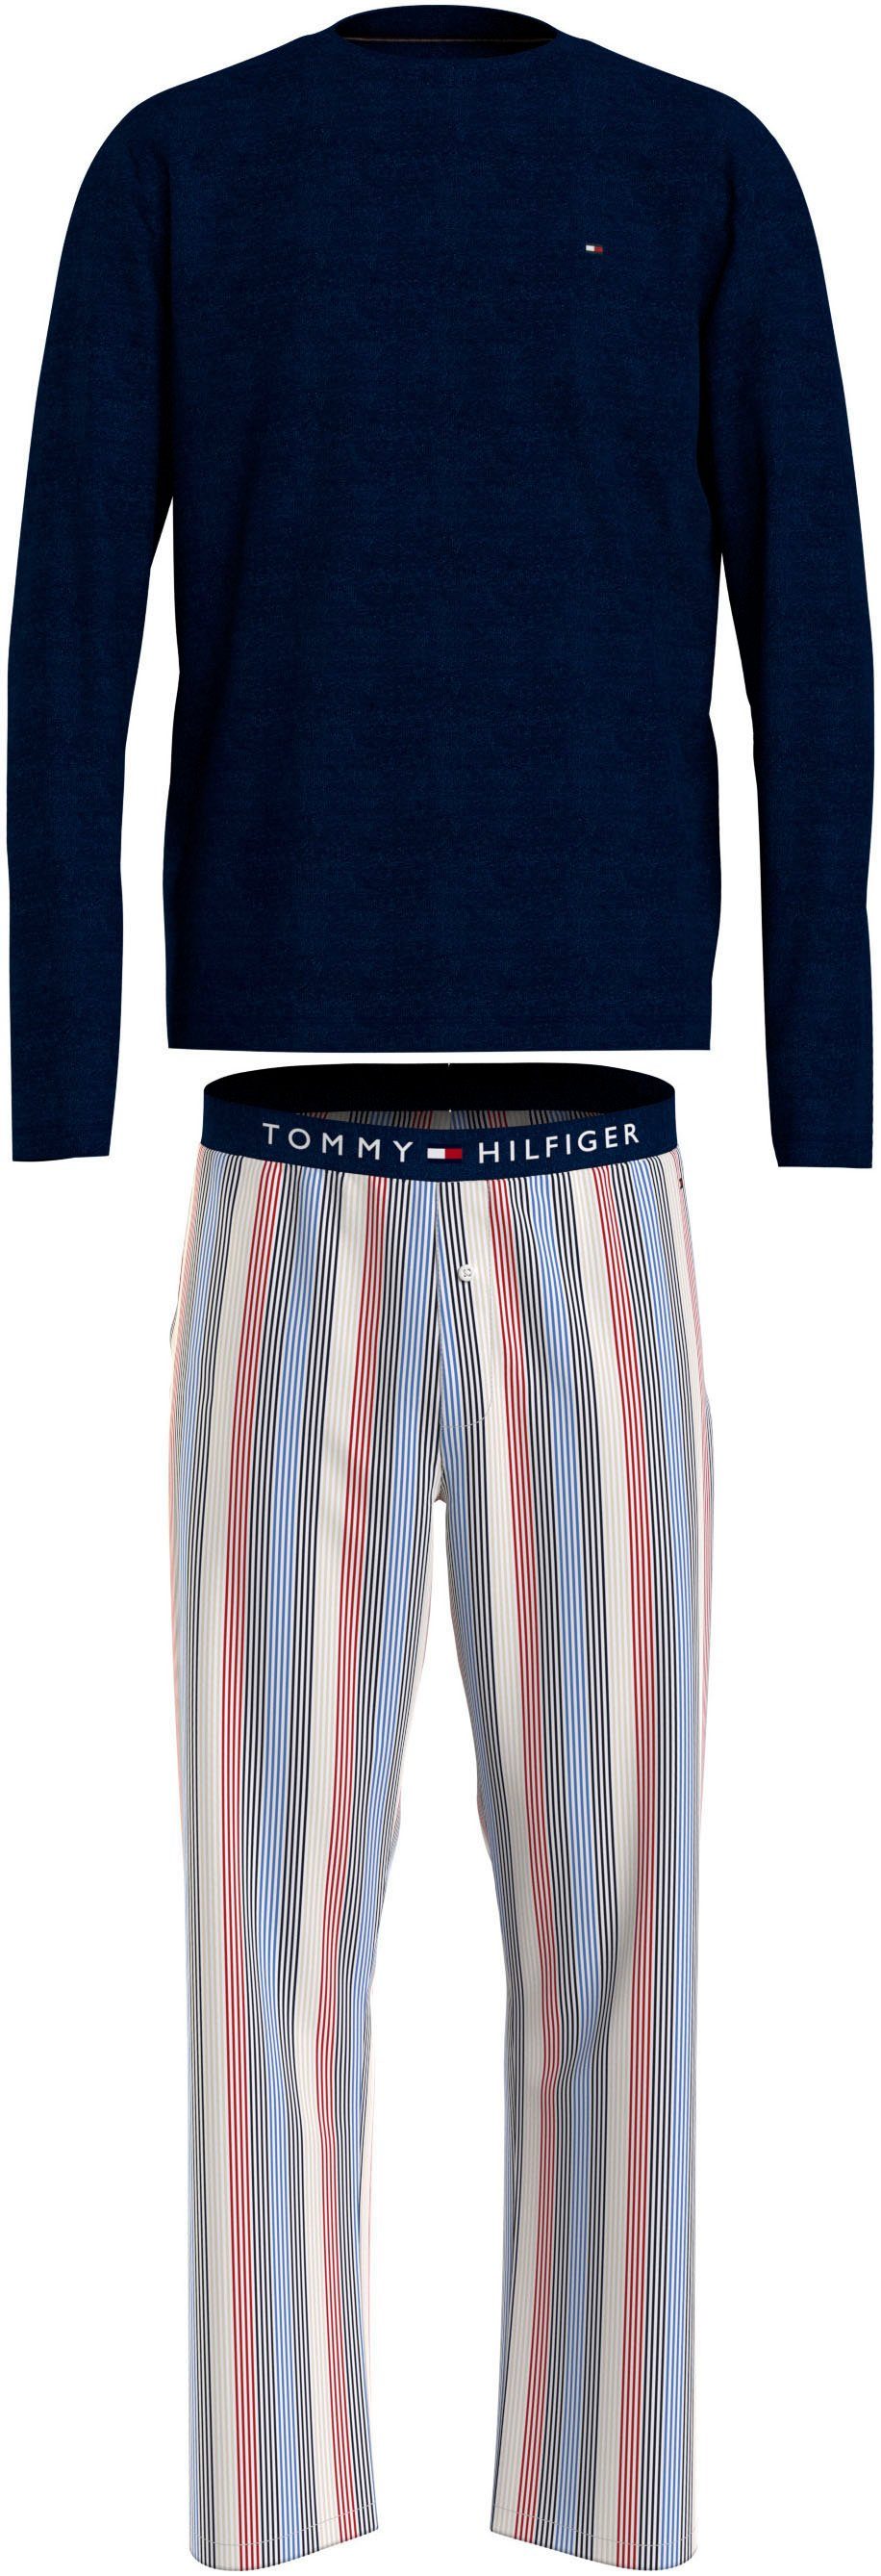 WOVEN LS Pyjama Hilfiger PRINT 2 tlg., Underwear PANT SET mit Logobund 2er) (Set, Tommy